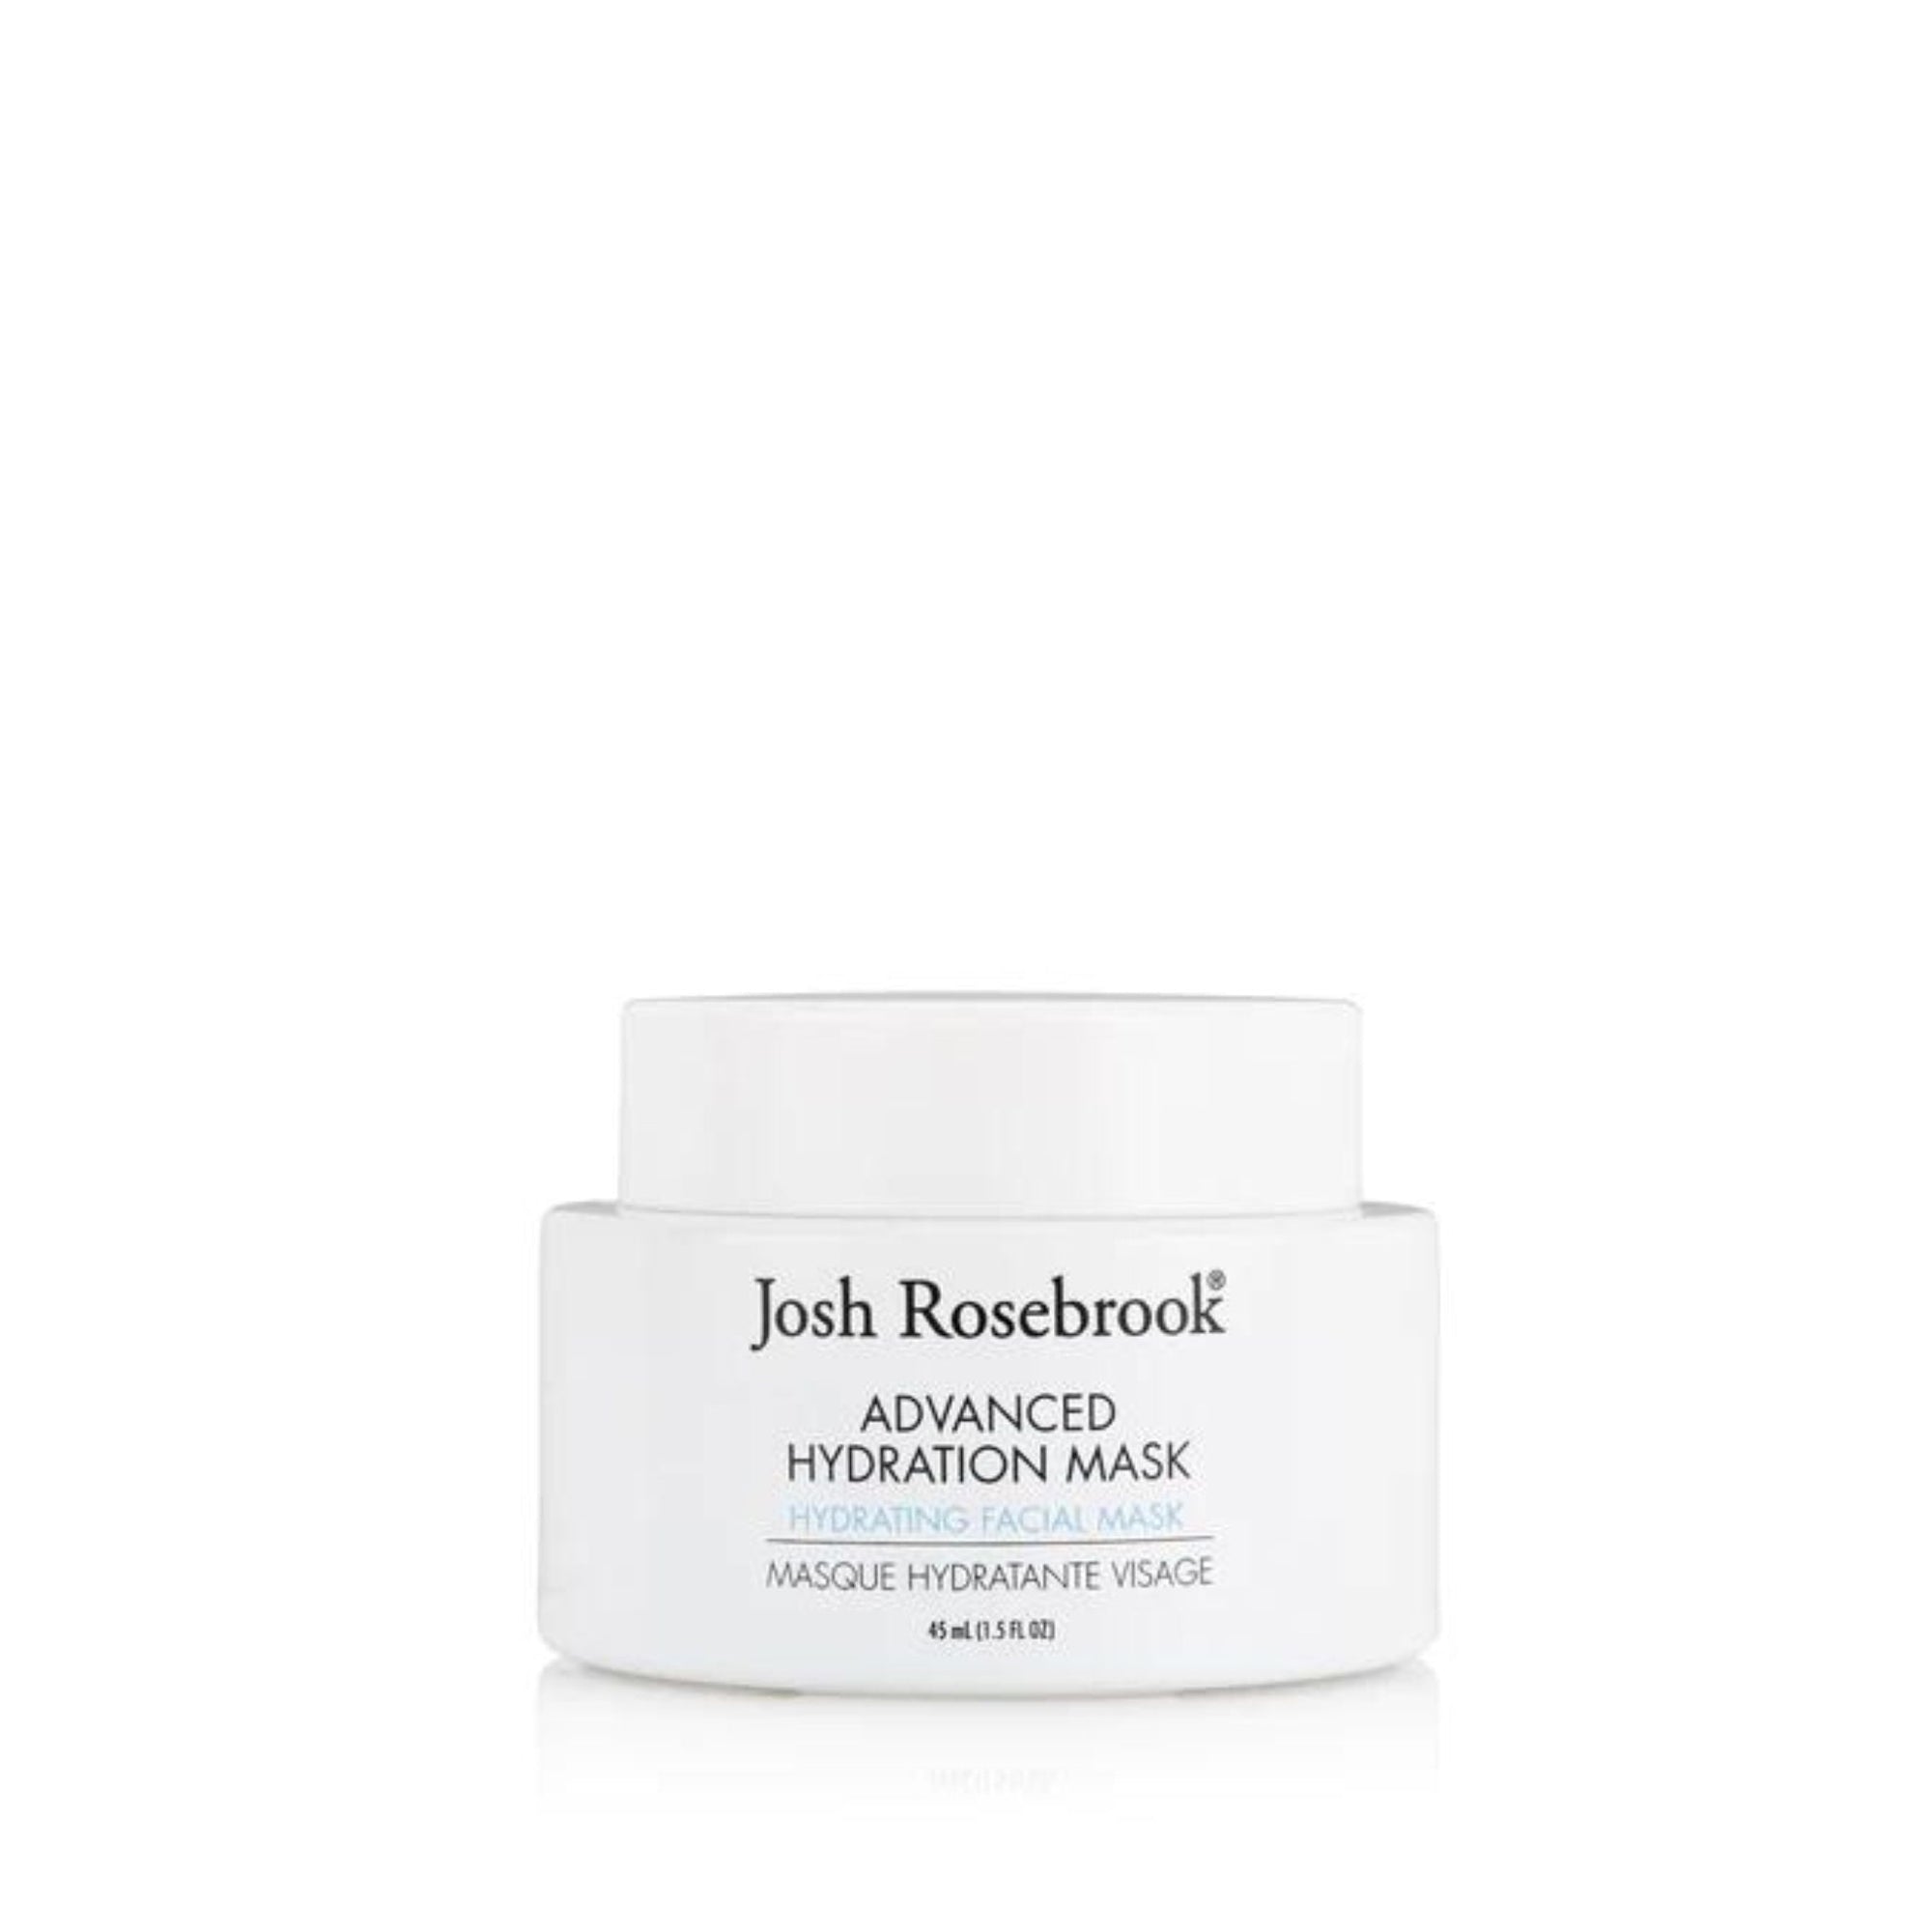 Josh Rosebrook - Josh Rosebrook Advanced Hydration Mask - ORESTA clean beauty simplified